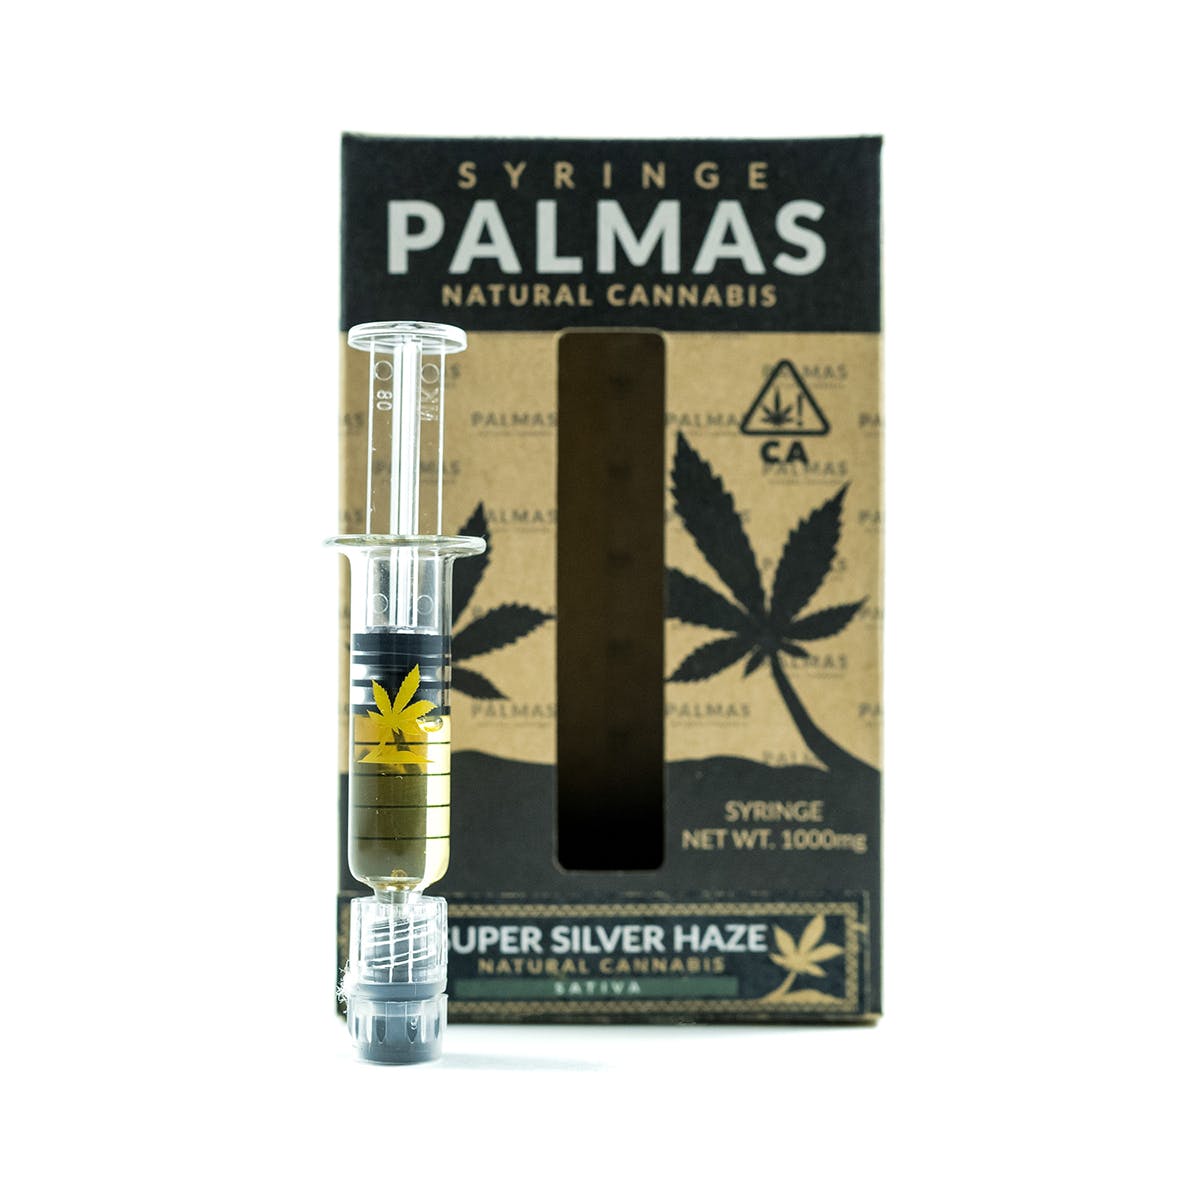 Palmas Syringe - Super Silver Haze 1000mg